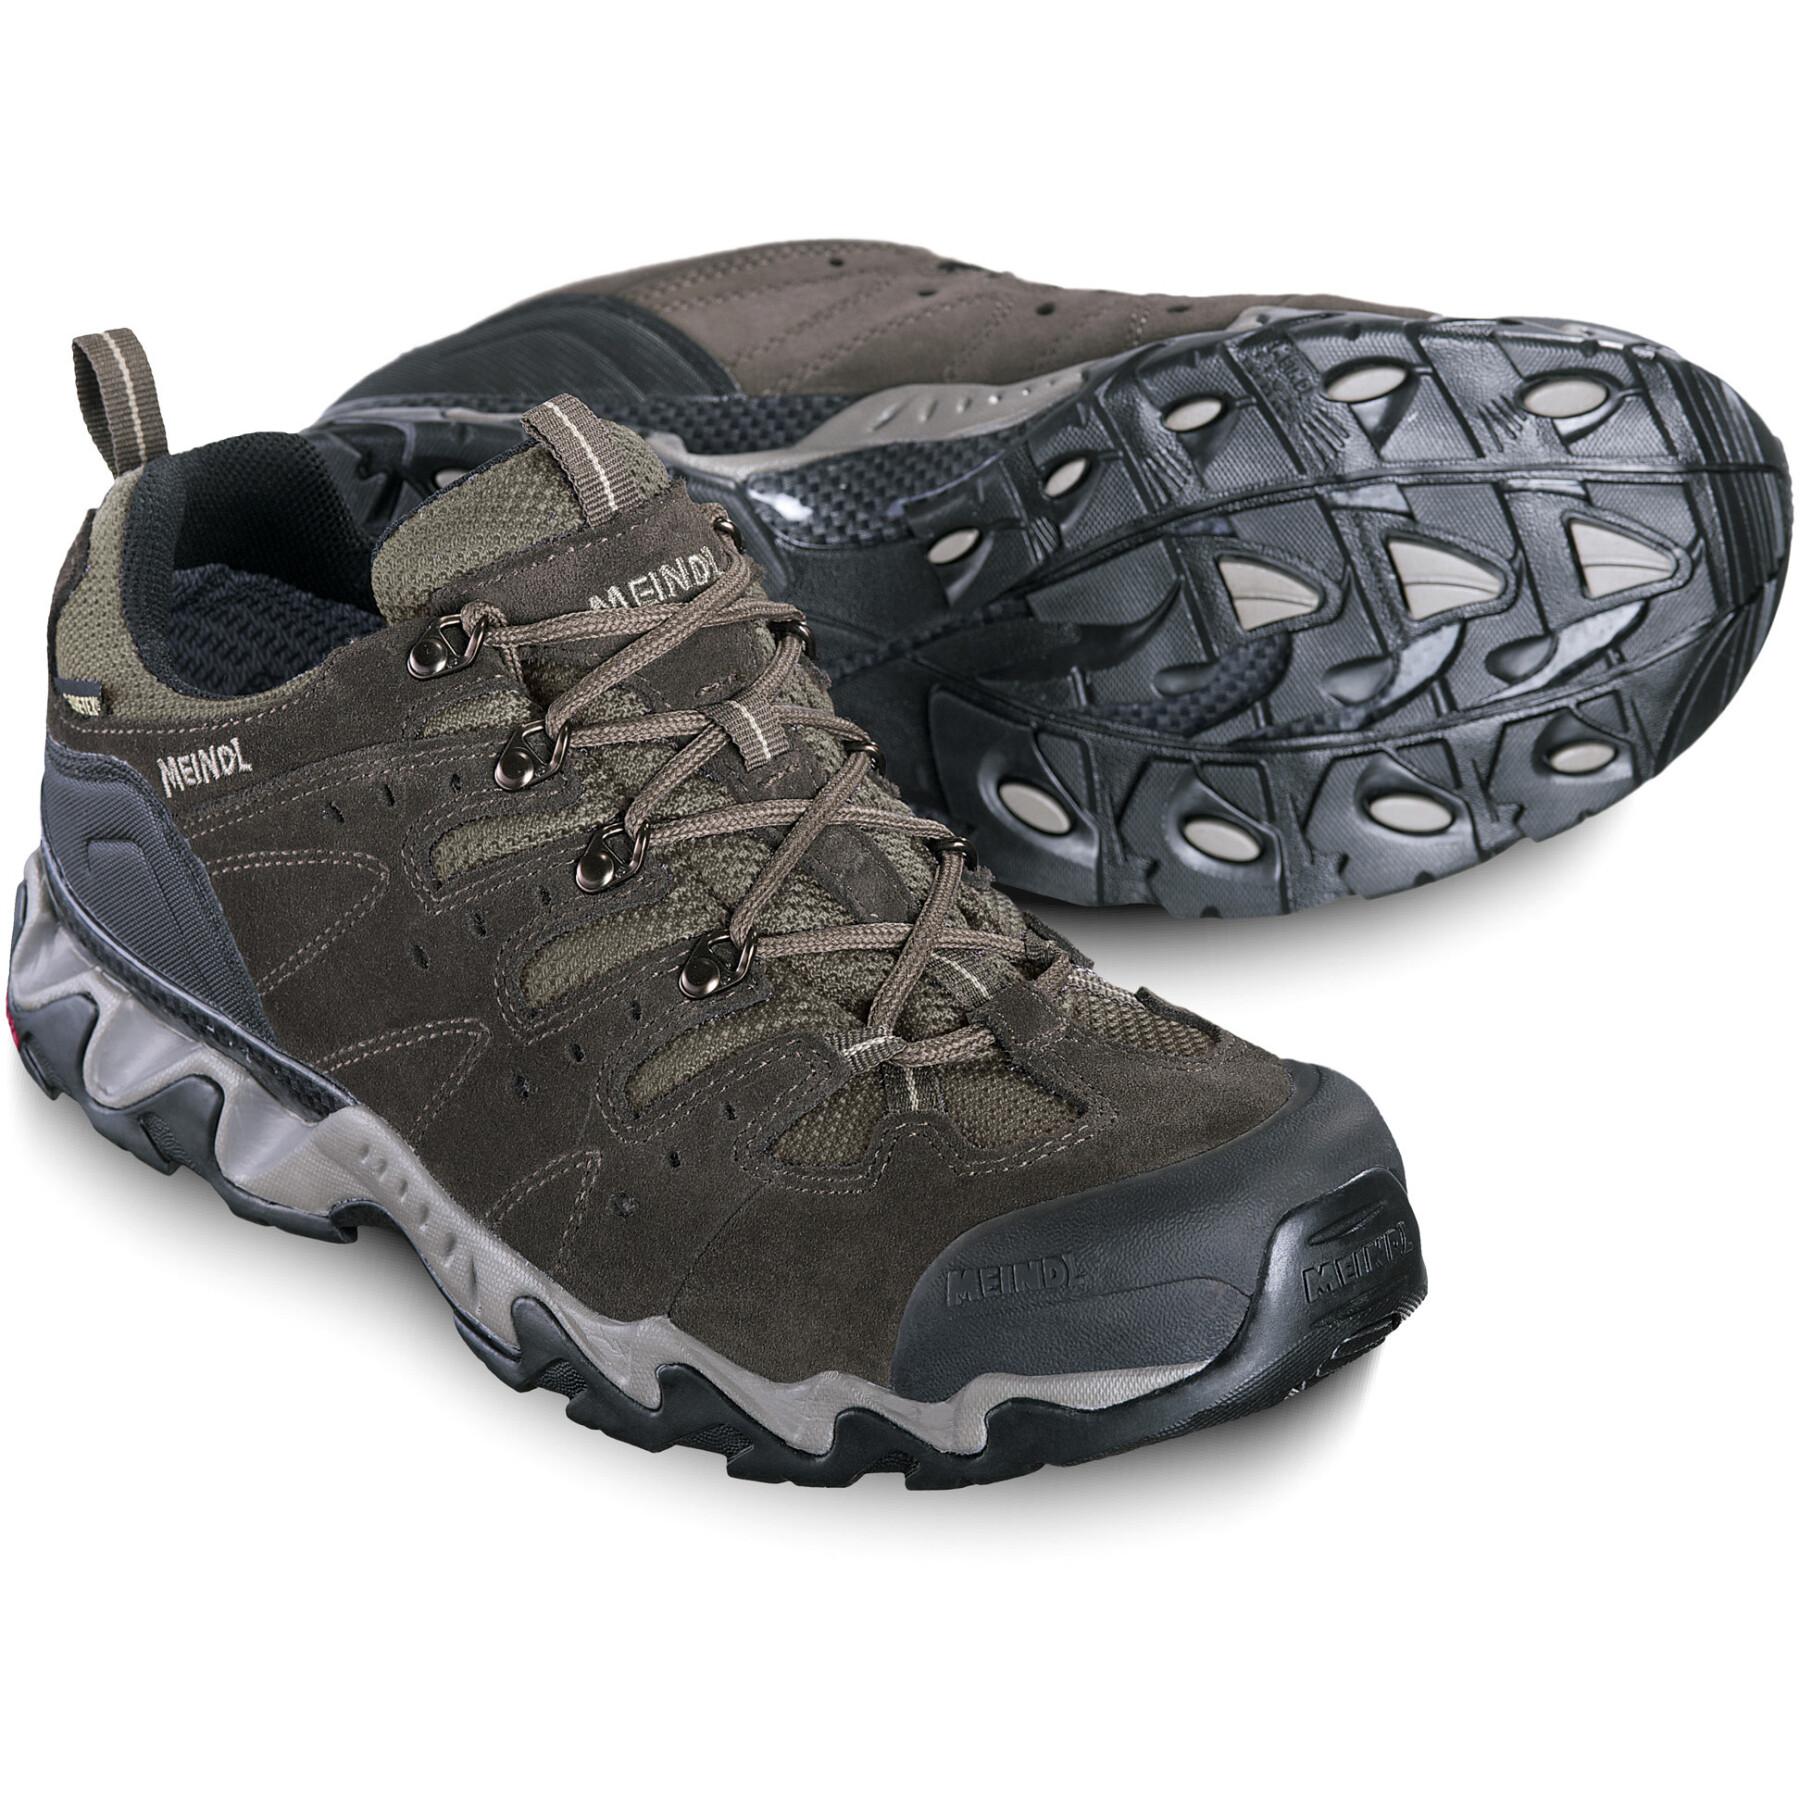 hulp in de huishouding Vergelijking Boekhouder Hiking shoes Meindl Portland GTX - Mid shoes - Hiking Shoes - Hiking